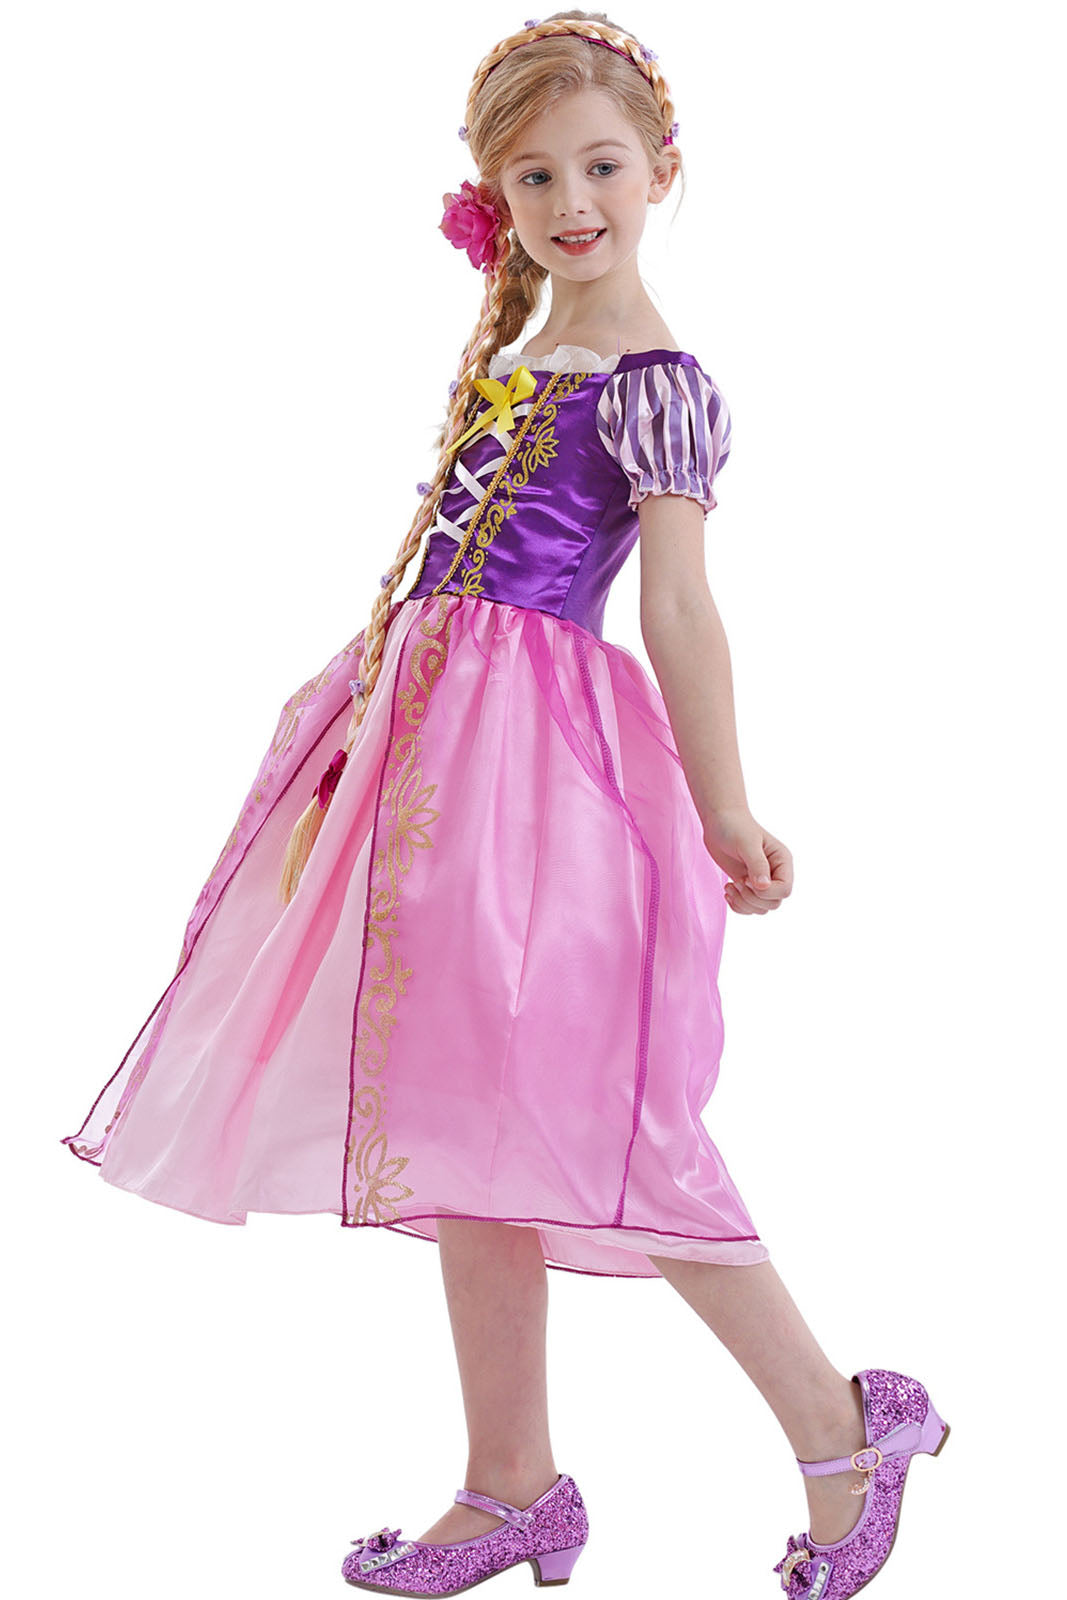 Girls Elsa Dress Puff Sleeve Princess Costume